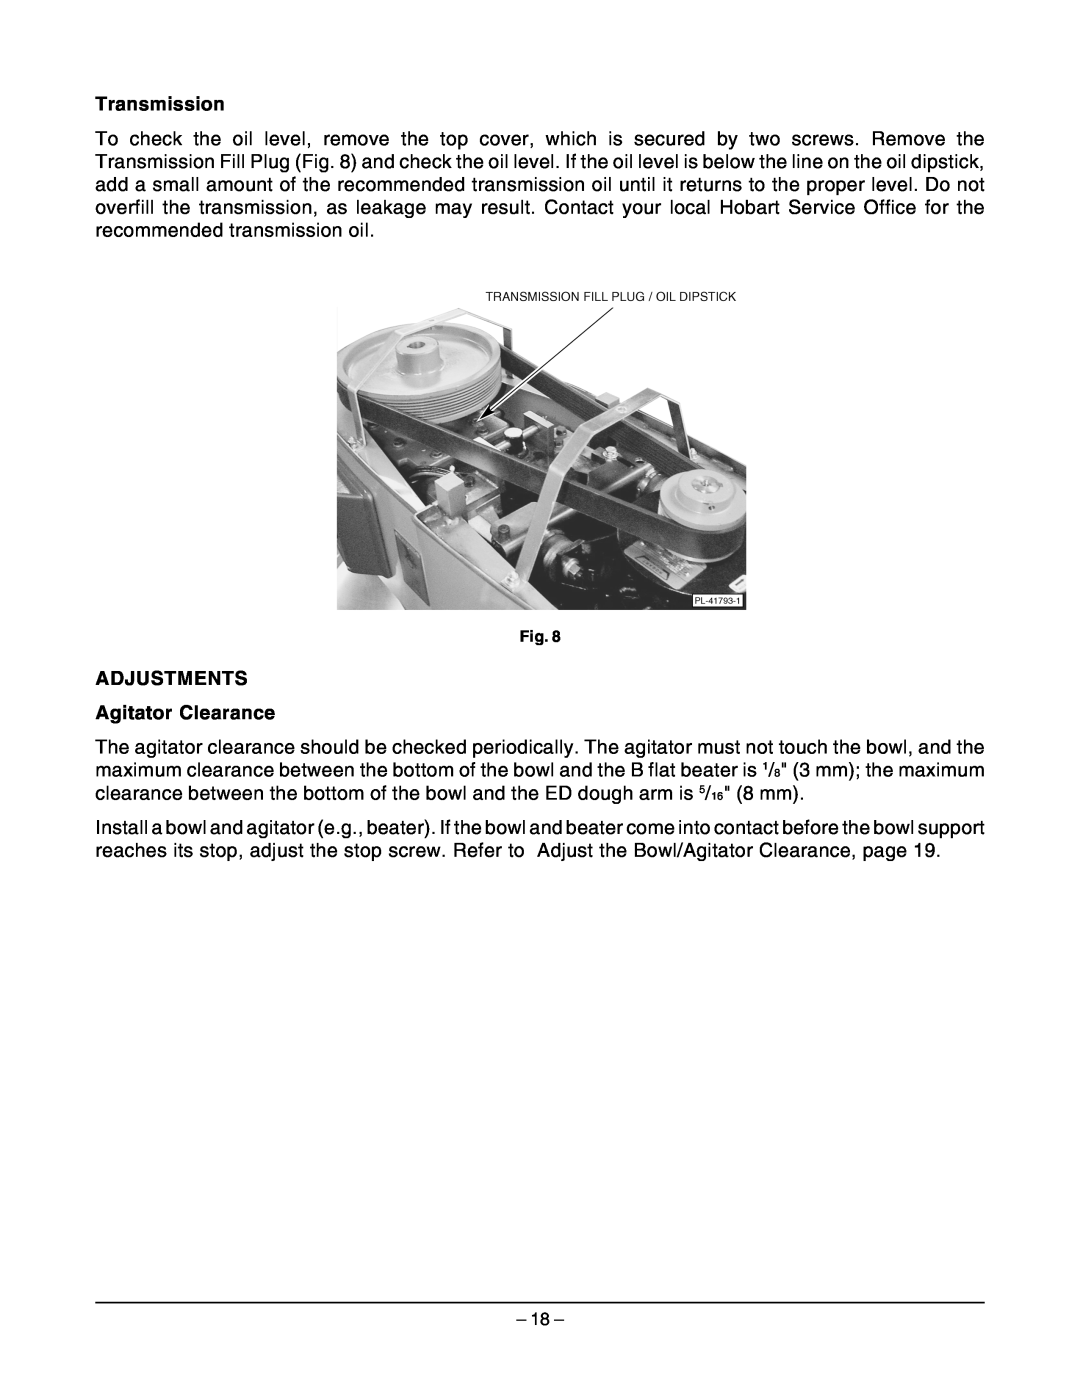 Hobart HL661 instruction manual Transmission, ADJUSTMENTS Agitator Clearance 